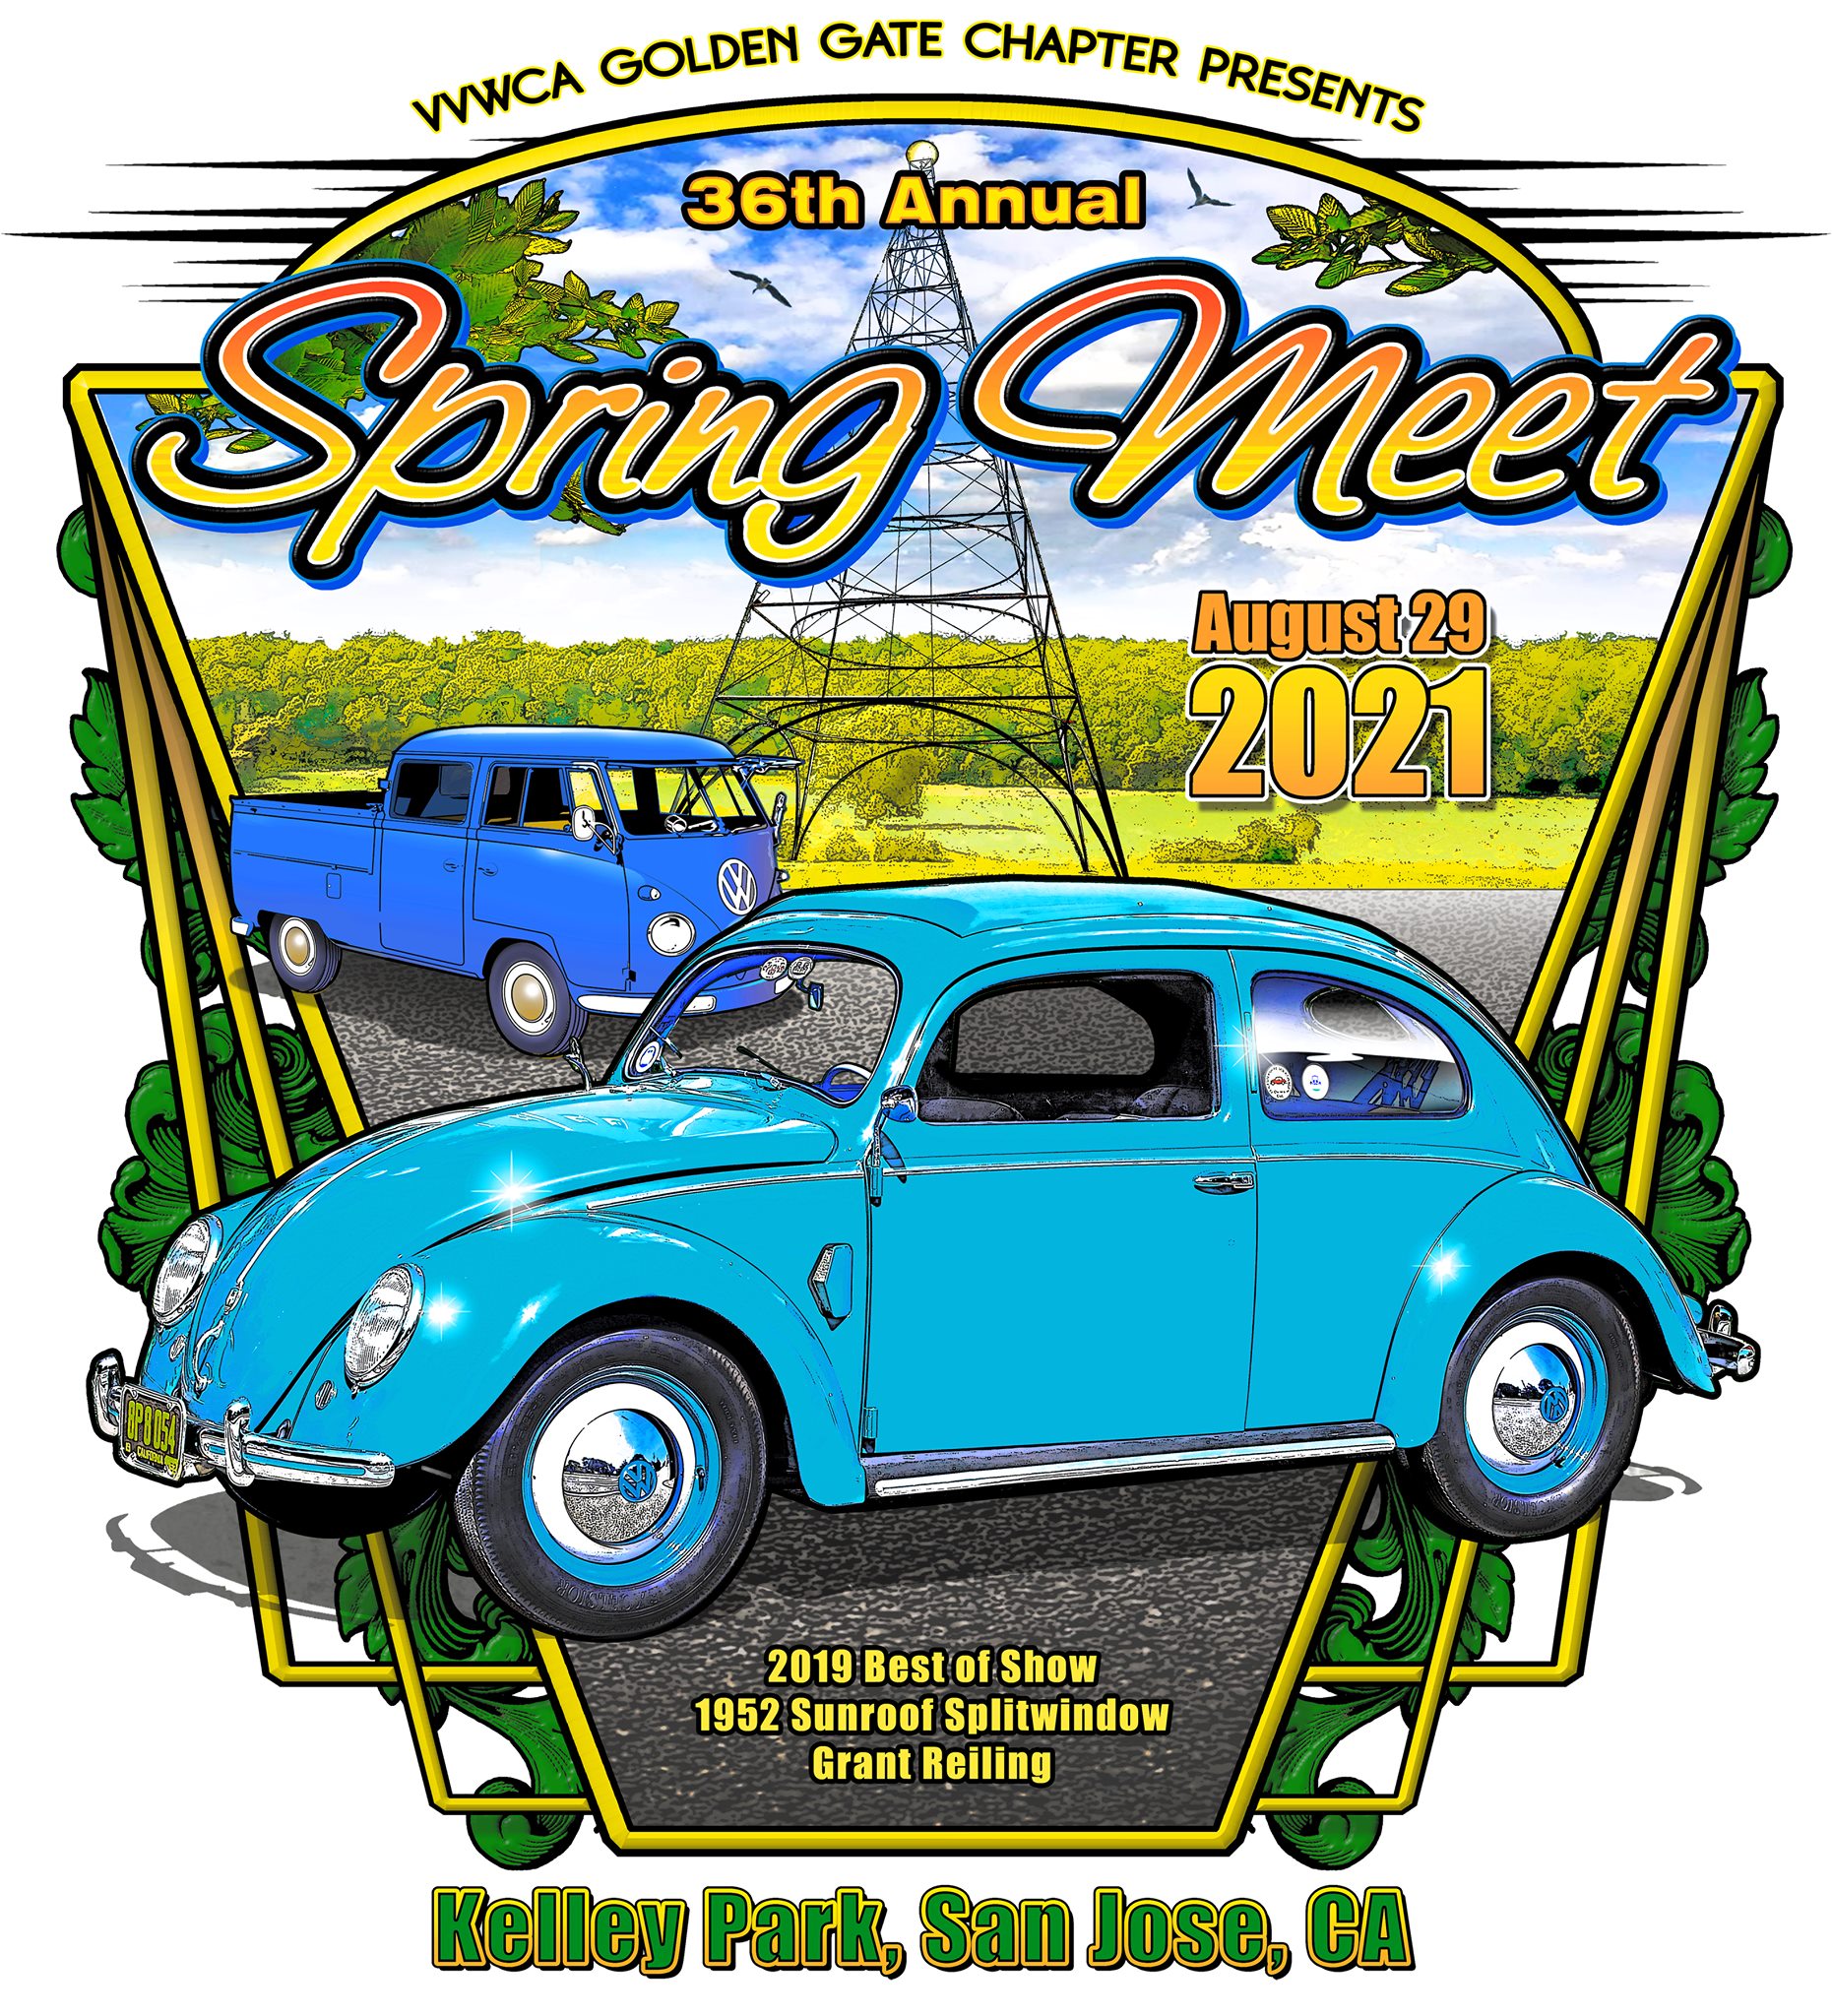 Vintage Volkswagen 36th Annual Spring Meet